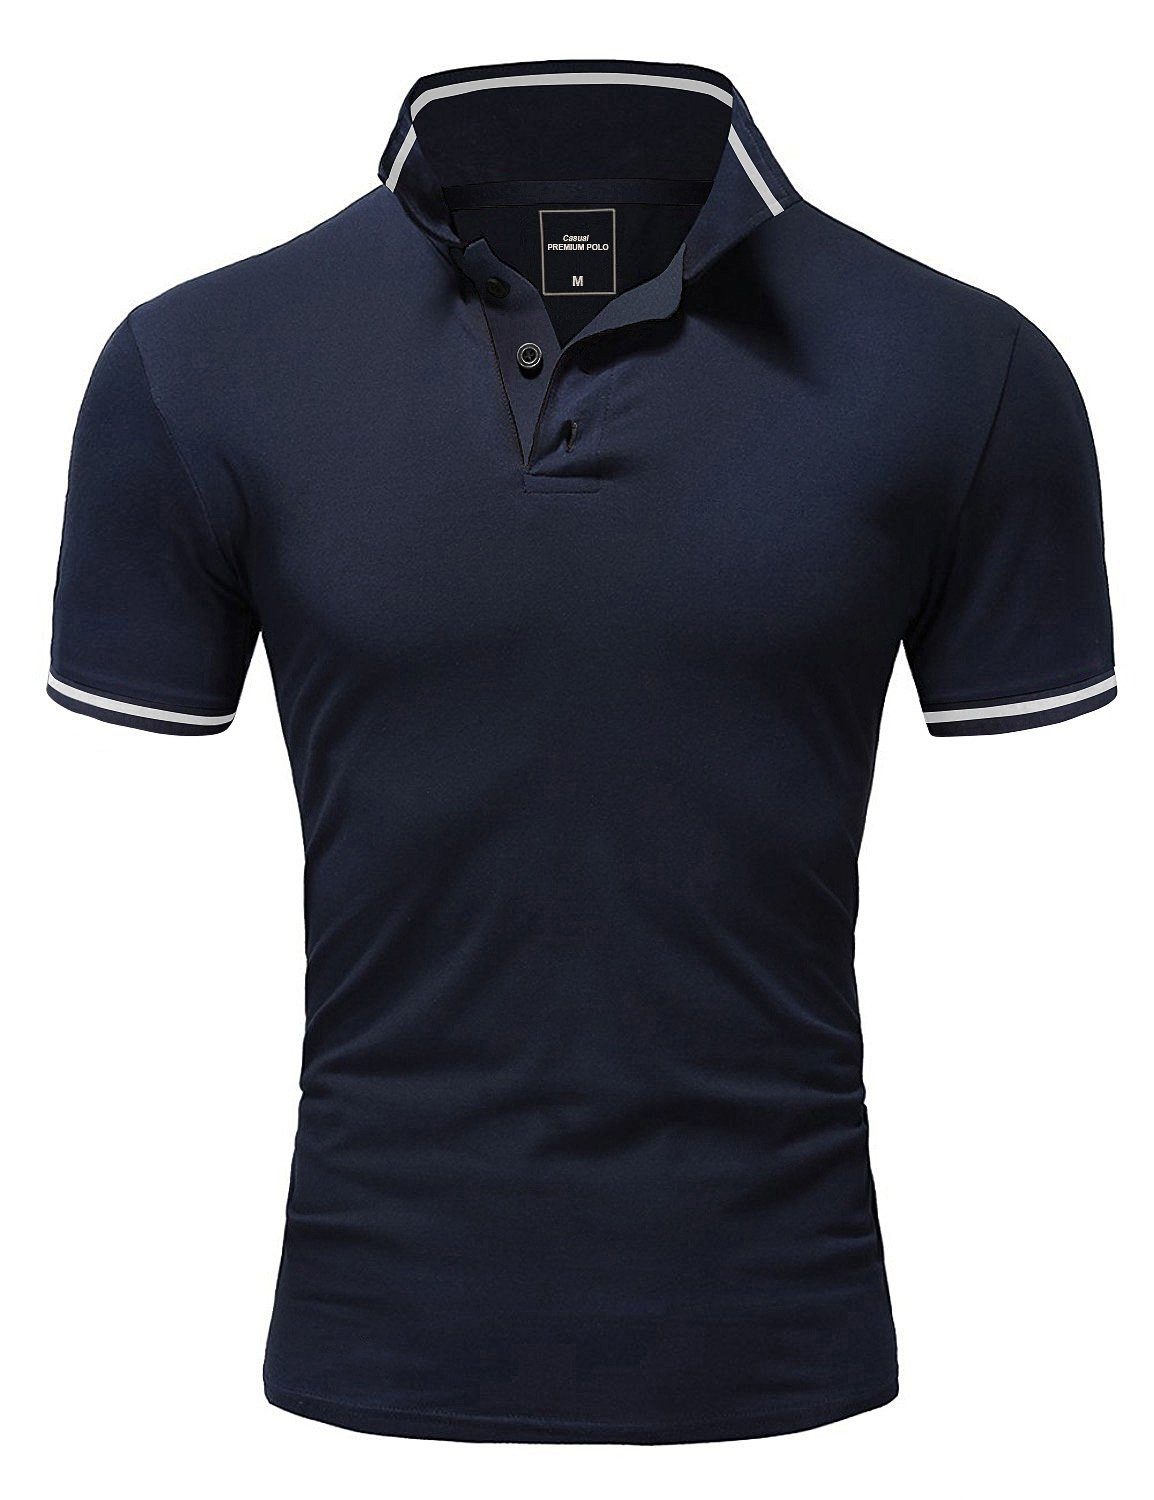 Herren PROVIDENCE Poloshirt Polohemd Navyblau/Weiß Basic T-Shirt Kontrast Amaci&Sons Kurzarm